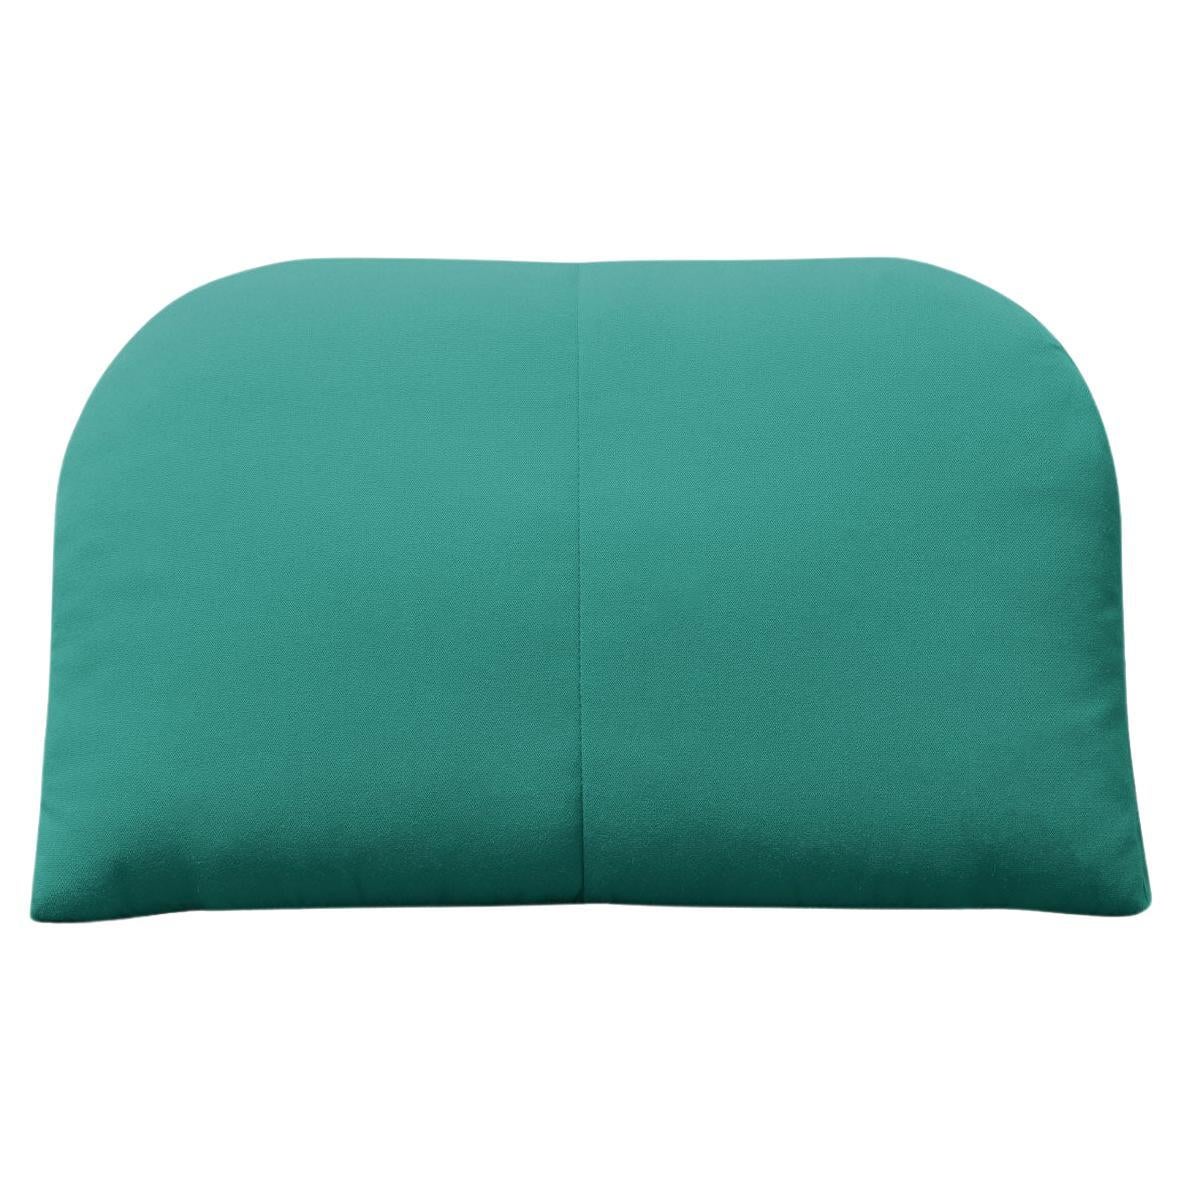 Bend Goods - Arc Throw Pillow in Aruba Sunbrella For Sale